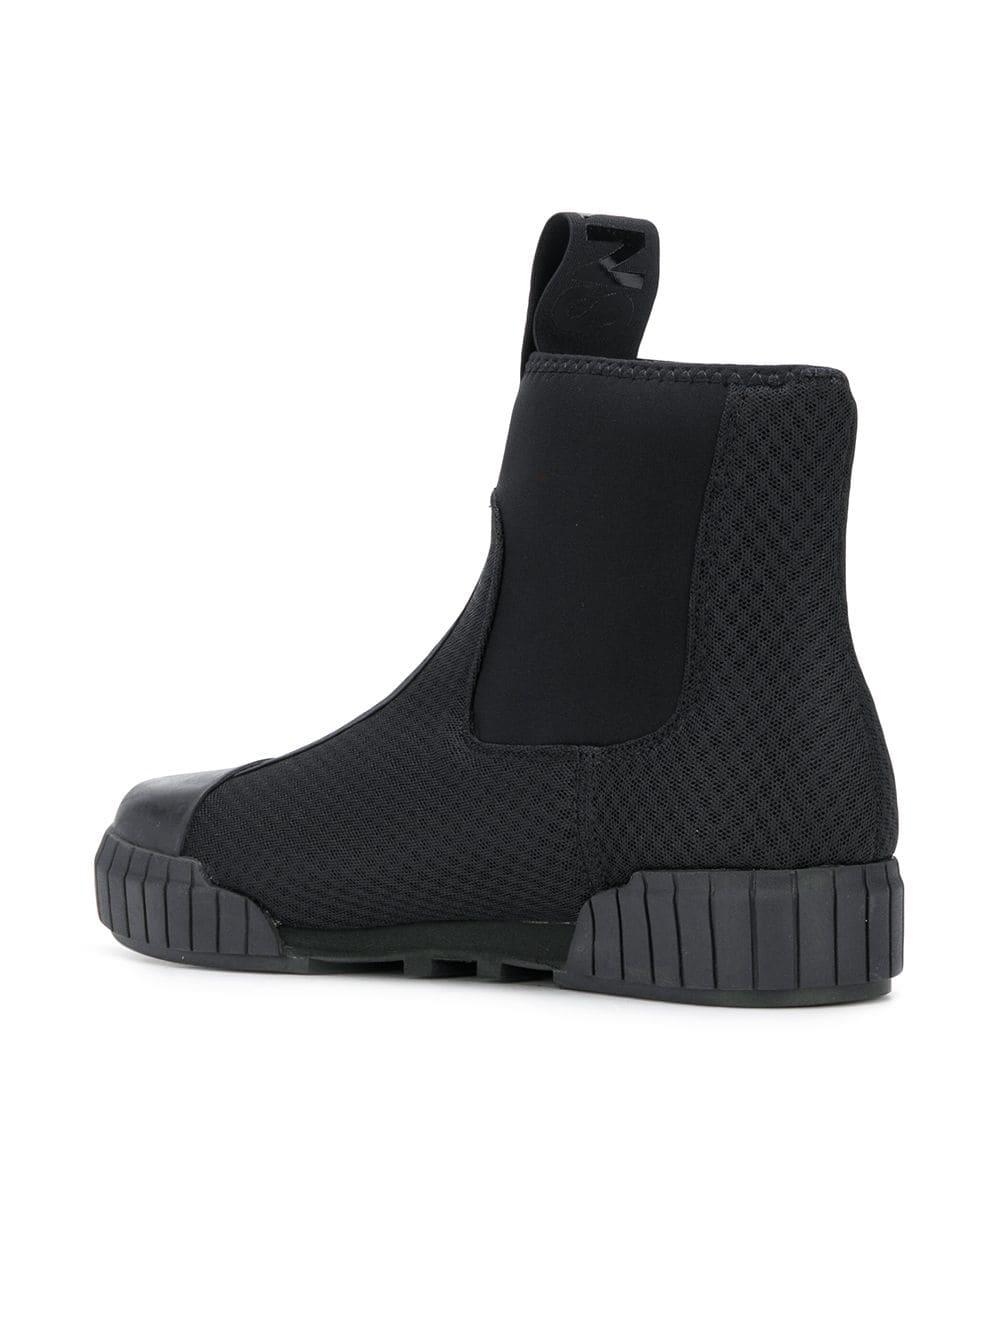 Calvin Klein Denim Ankle Boots in Black for Men - Lyst